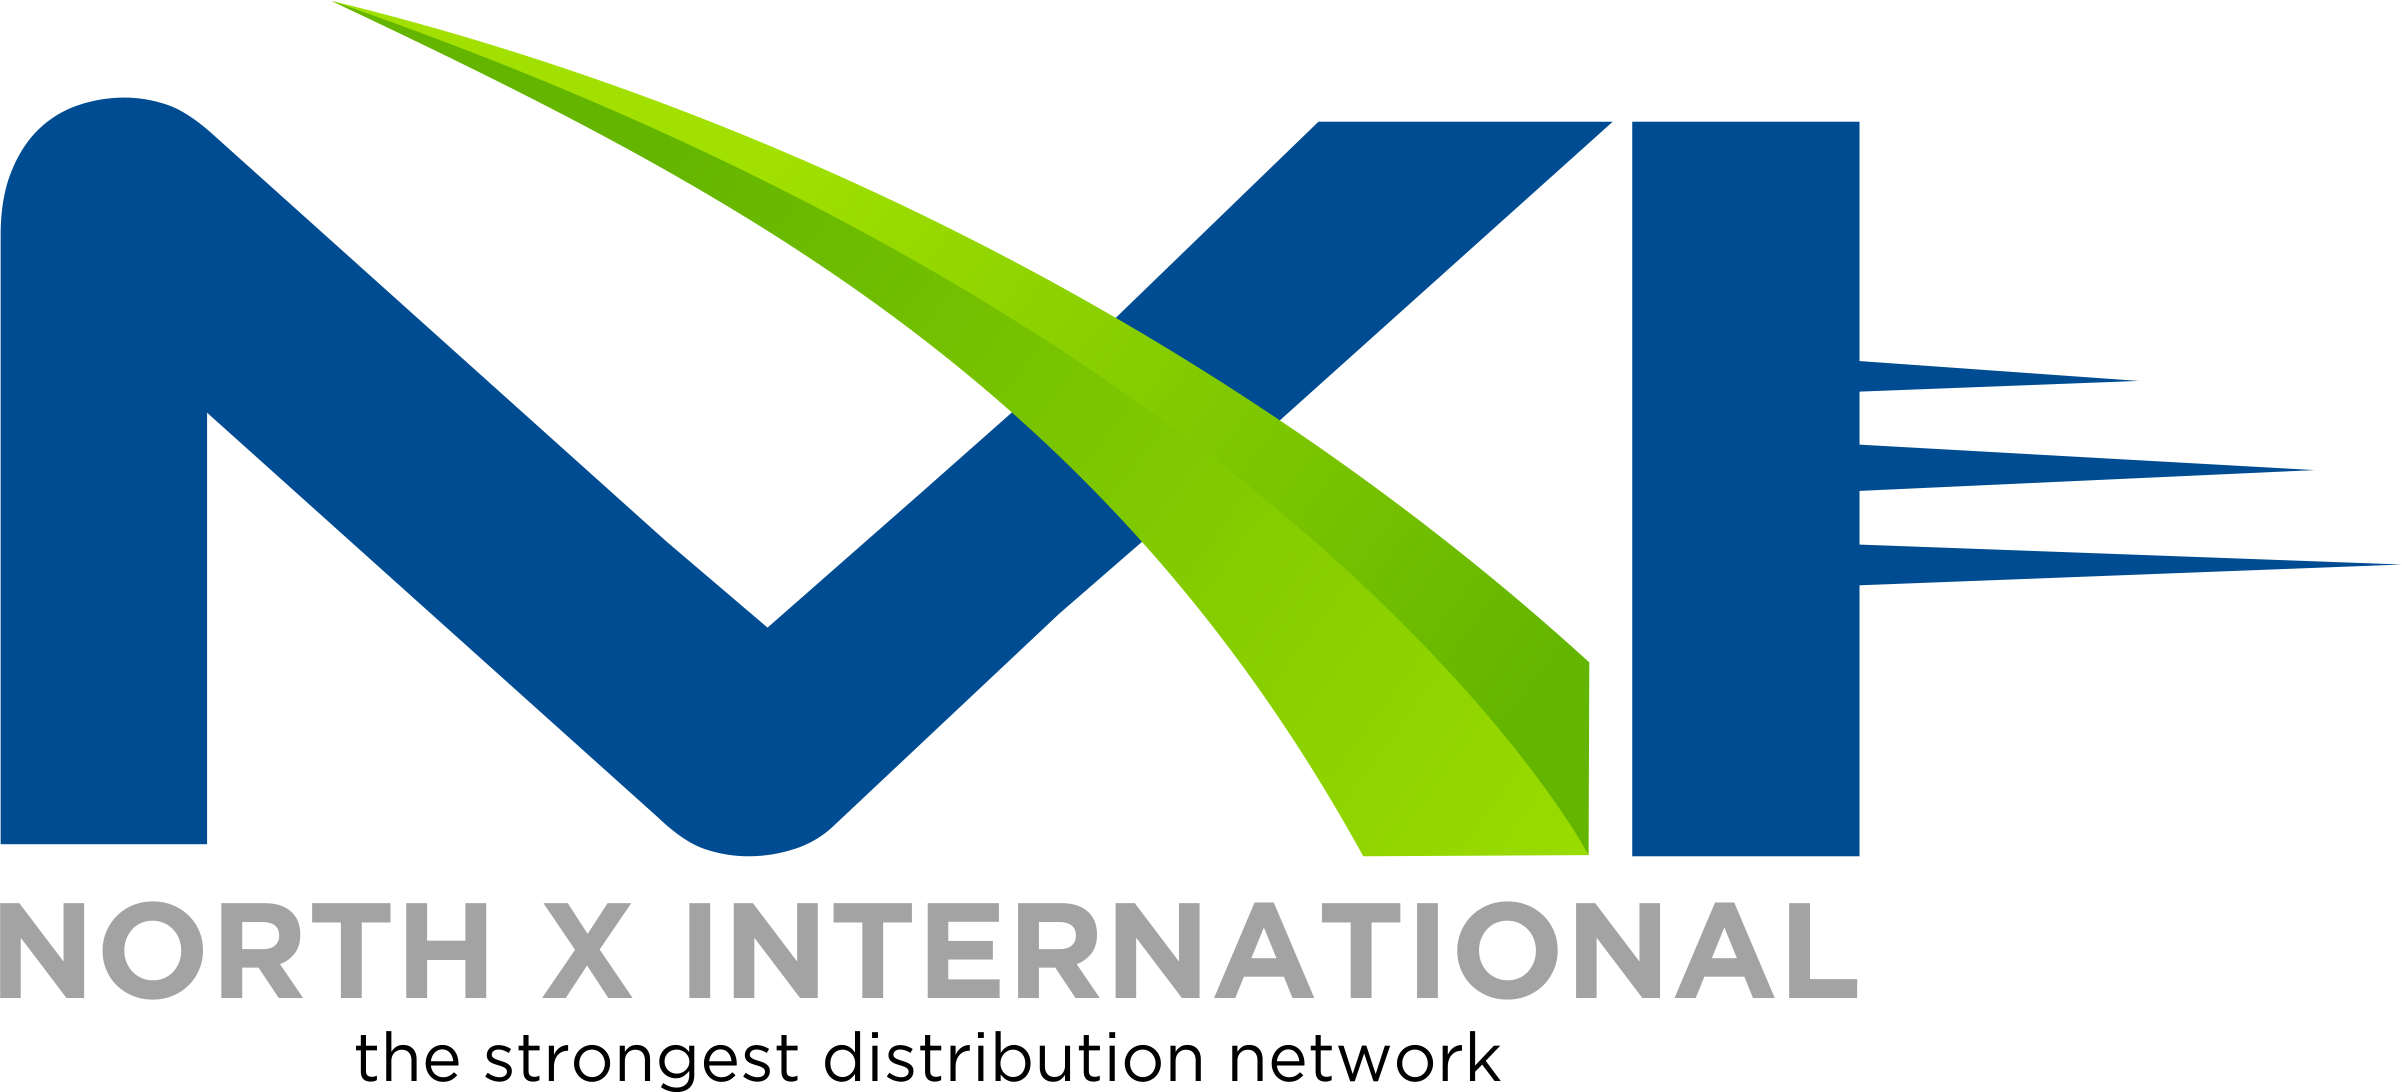 North X International